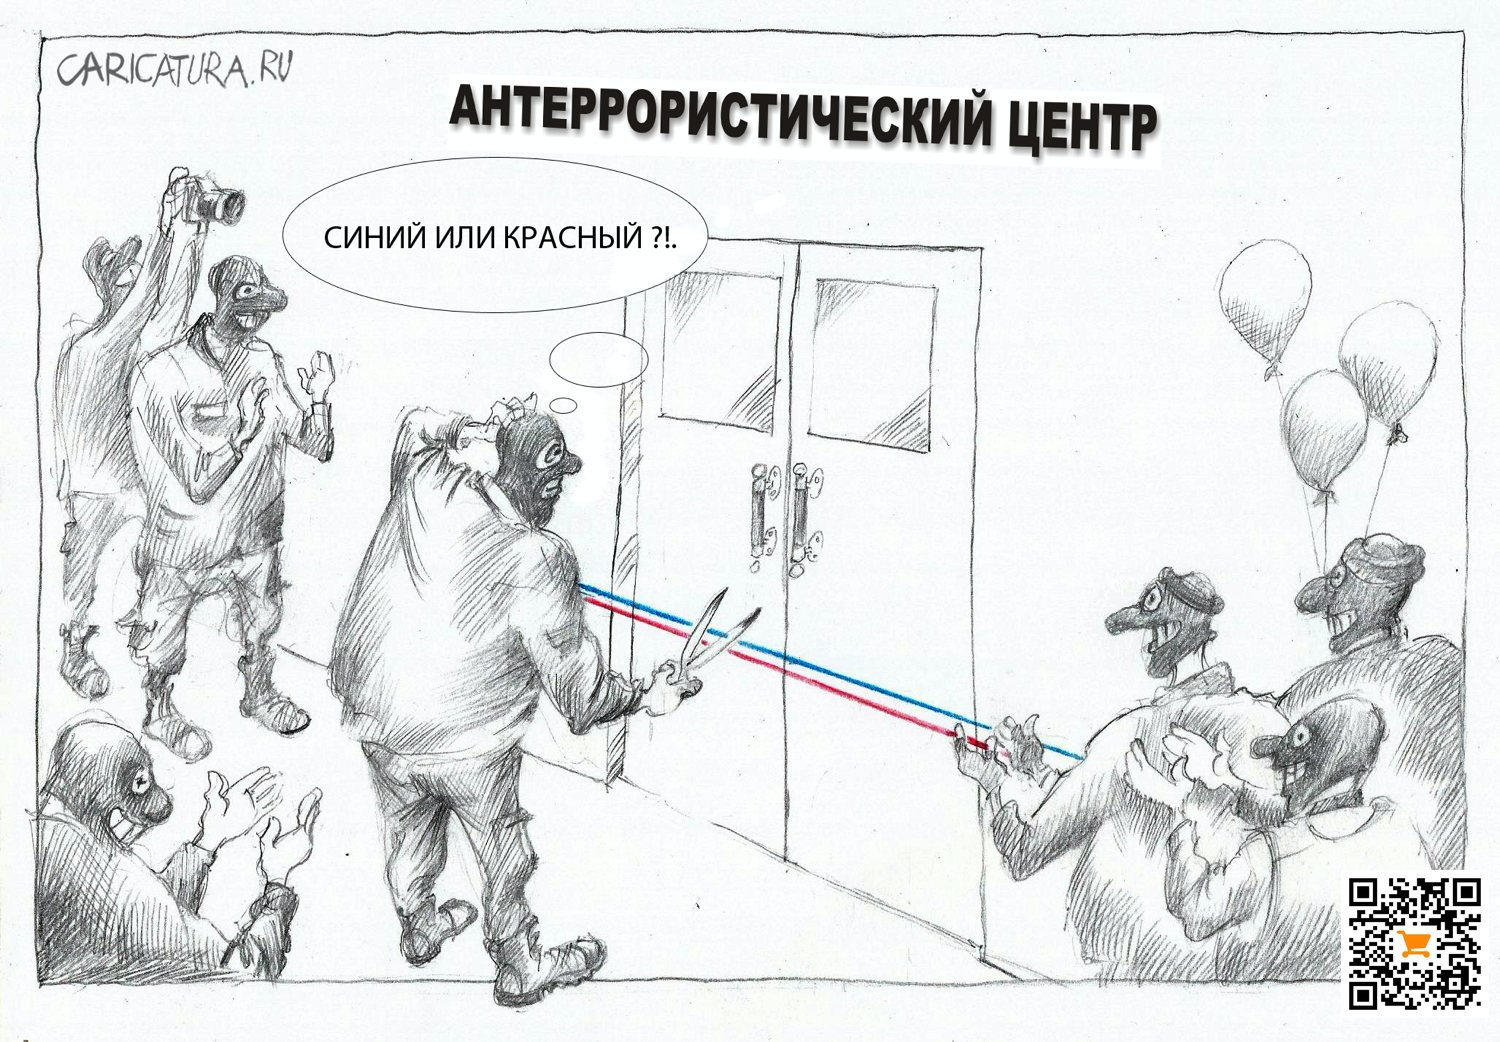 Карикатура "Открытие антитеррористического центра", Александр Шульпинов